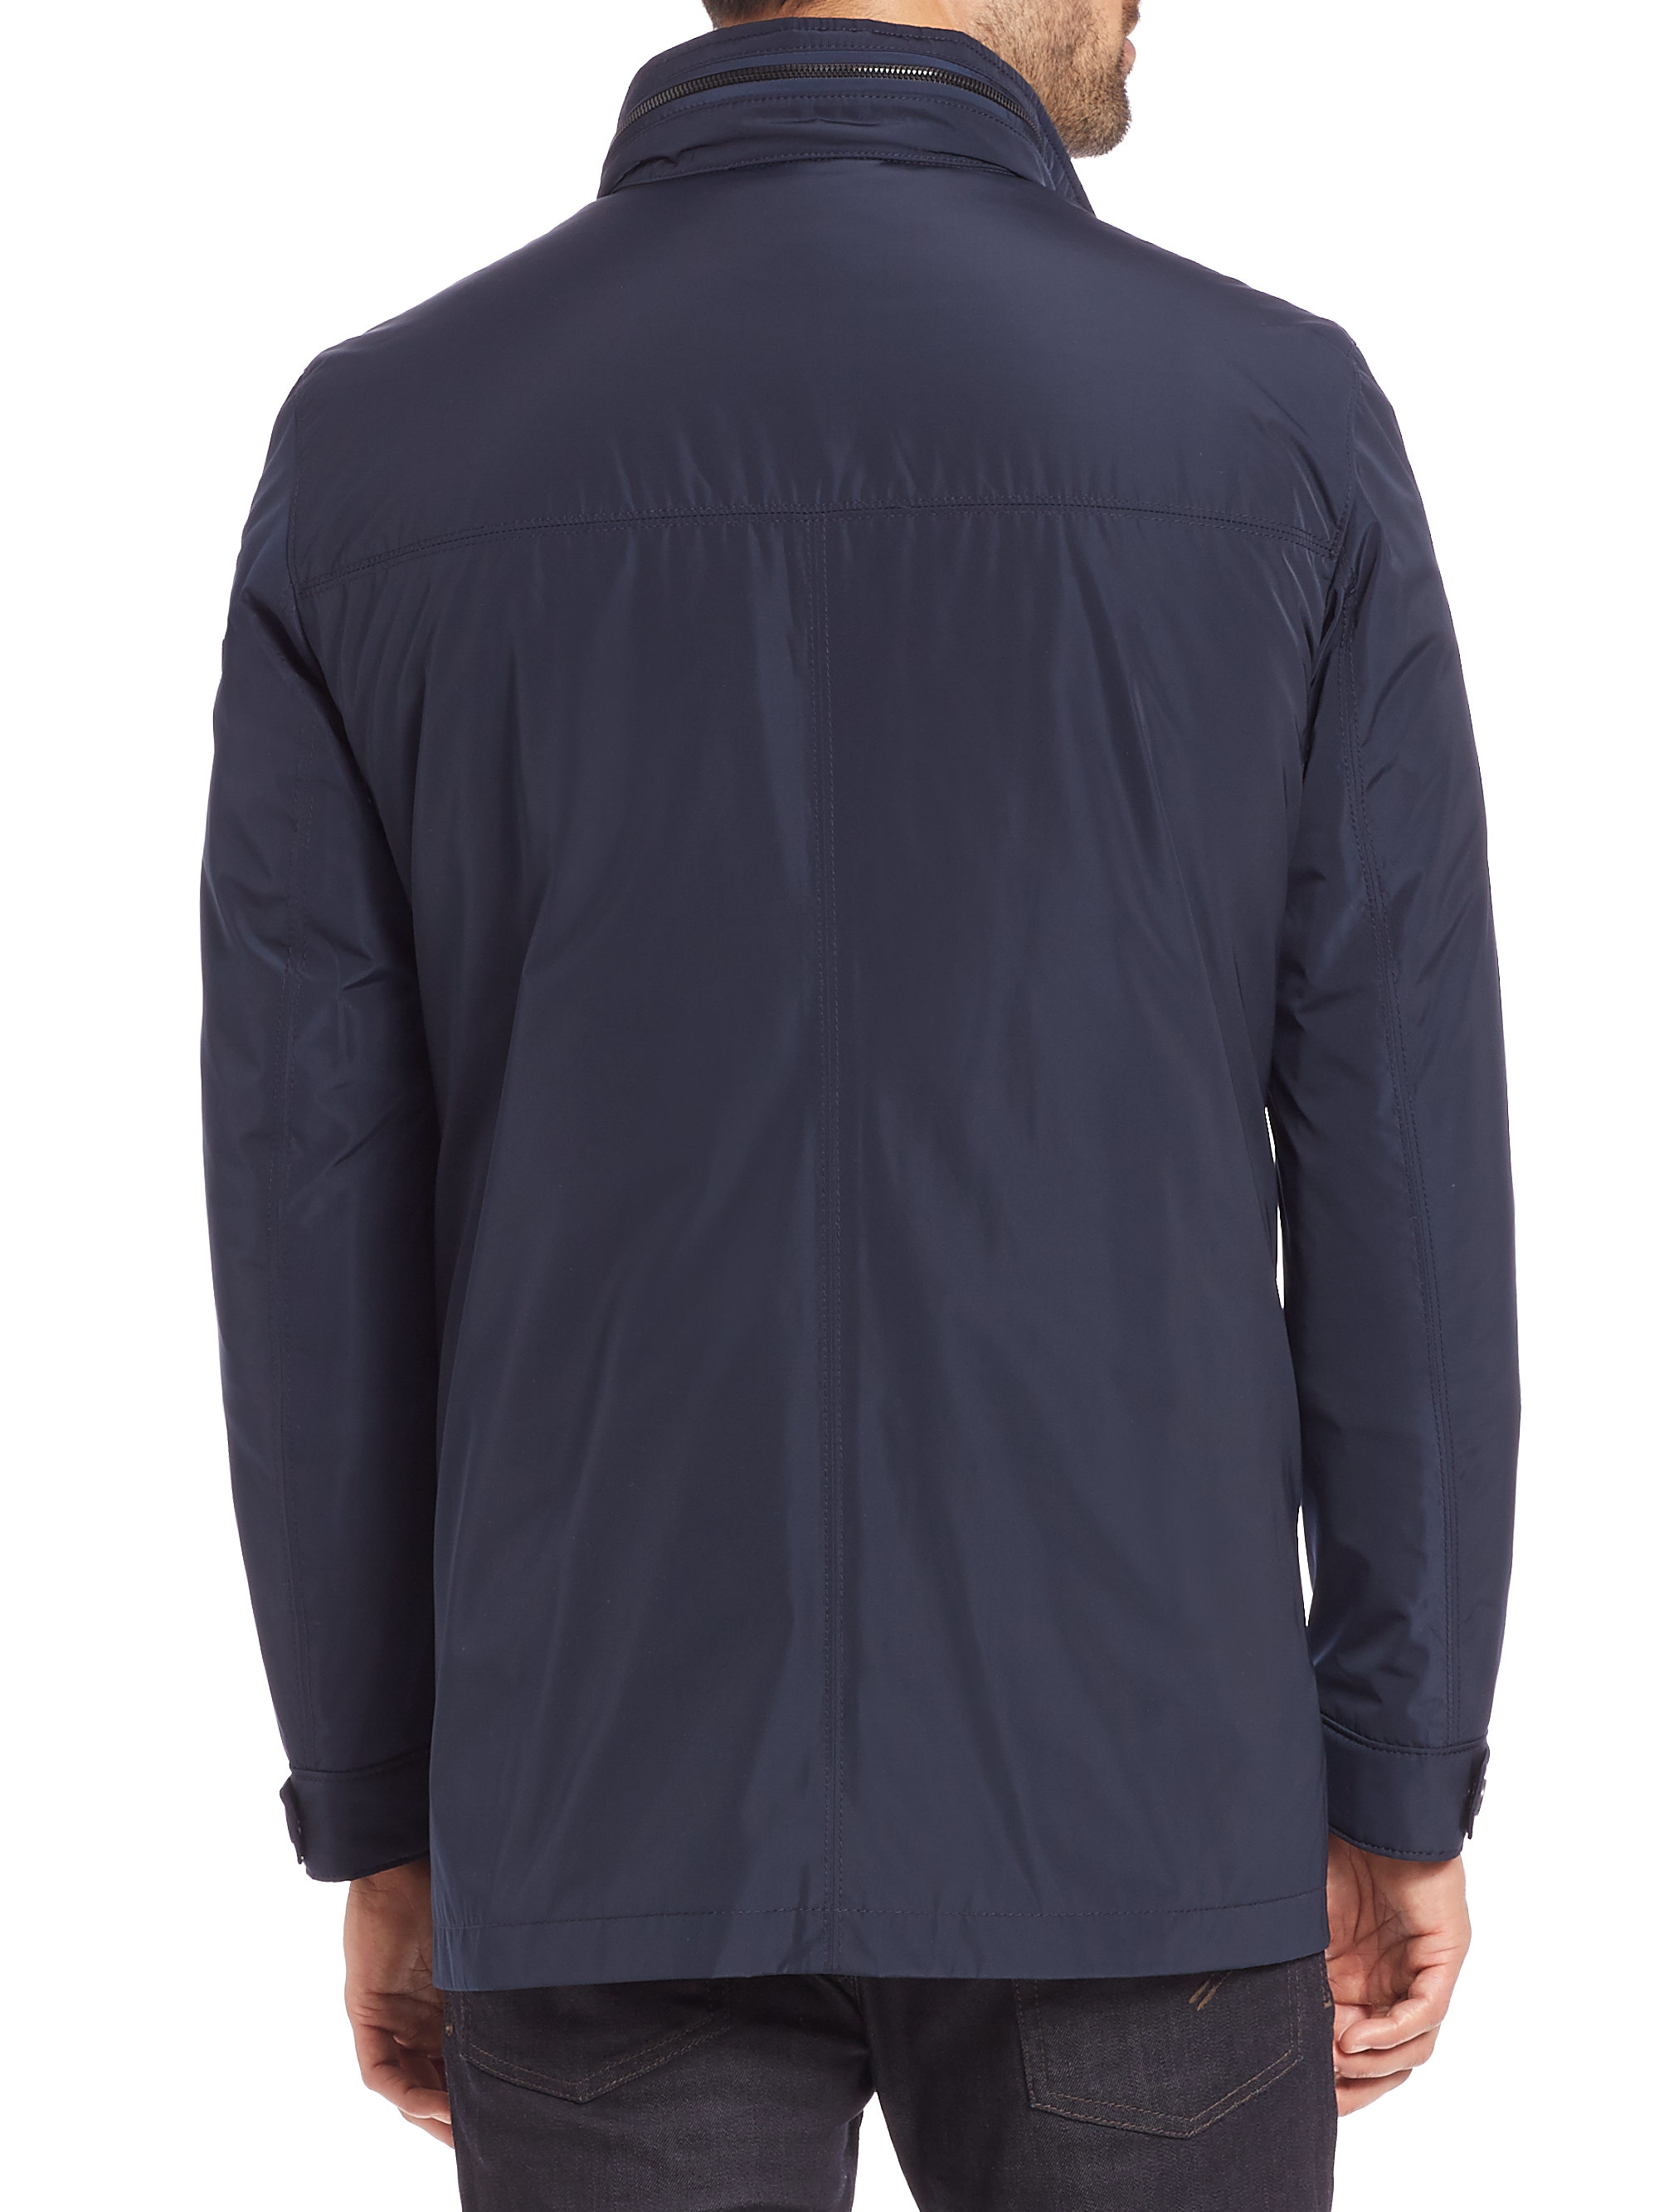 Lyst - Strellson Lightweight Jacket in Blue for Men